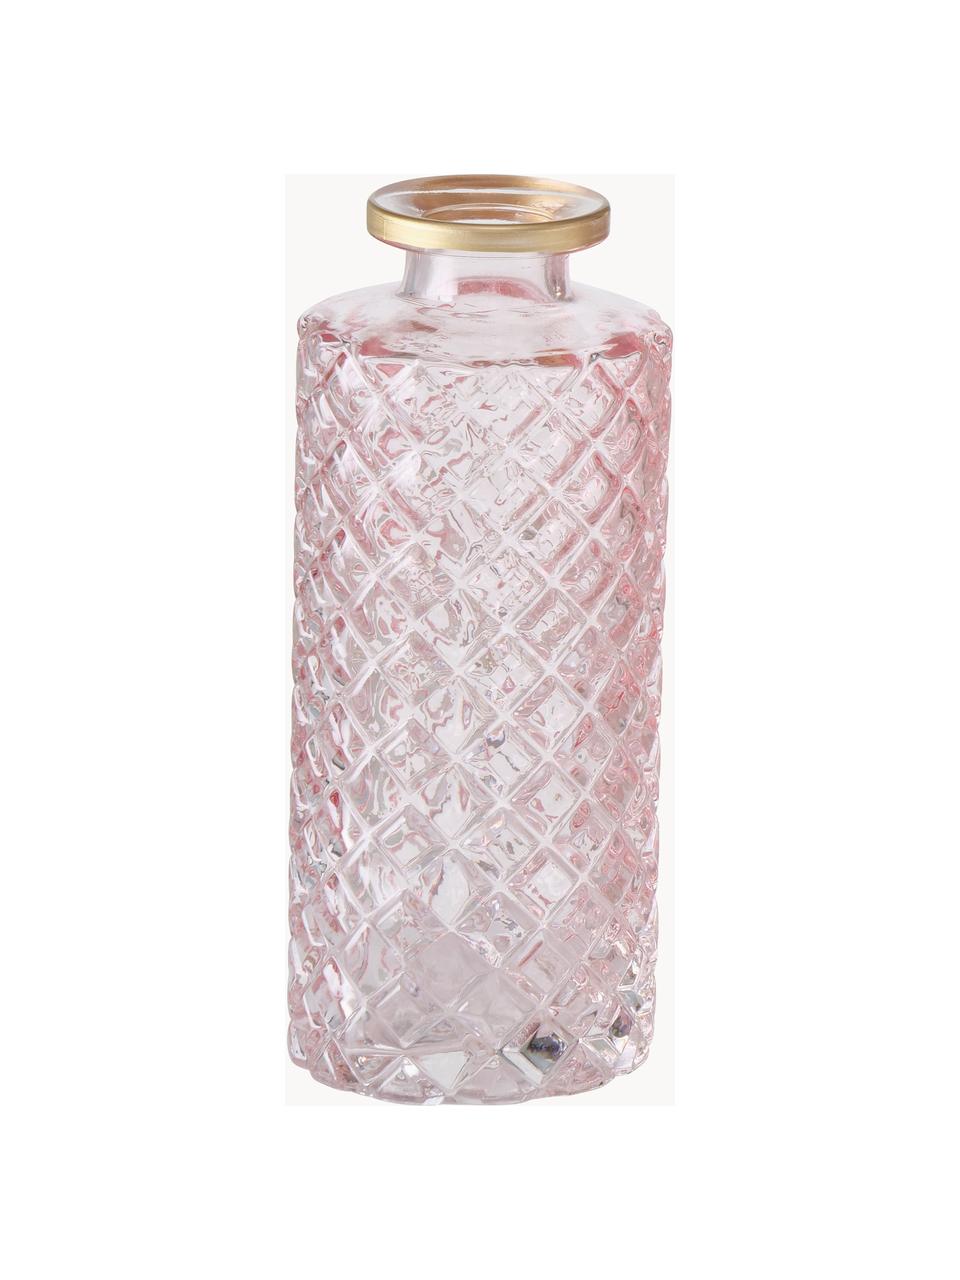 Kleine vazen Adore van glas, set van 3, Glas, geverfd, Lichtroze, transparant, zilverkleurig, Ø 5 x H 13 cm